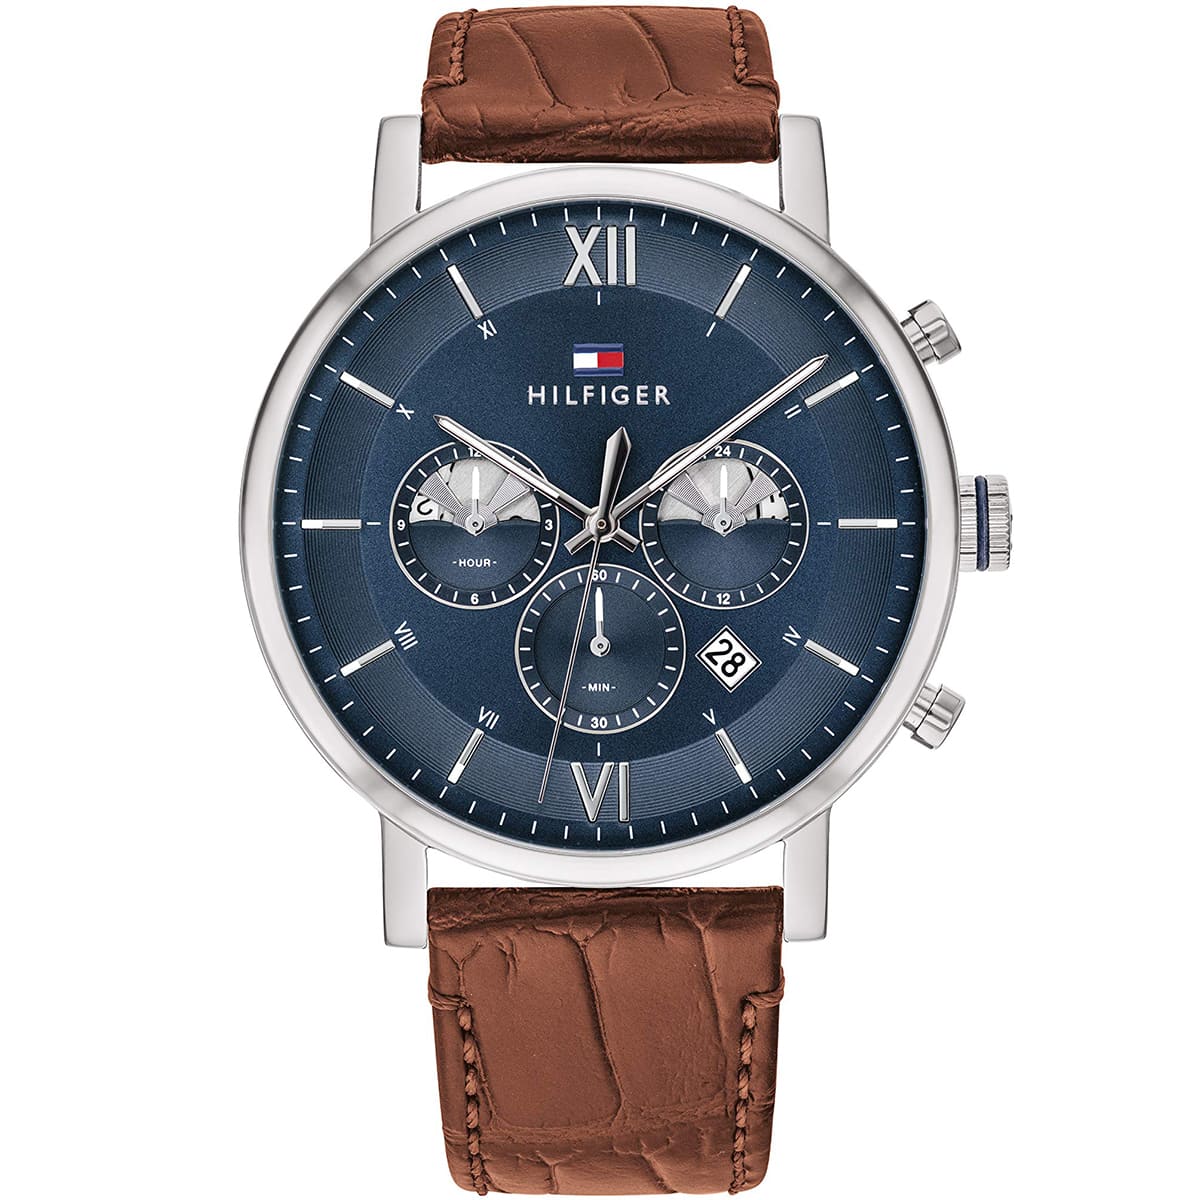 1710393-tommy-hilfiger-watch-men-blue-dial-leather-brown-strap-quartz-battery-analog-chronograph-evan